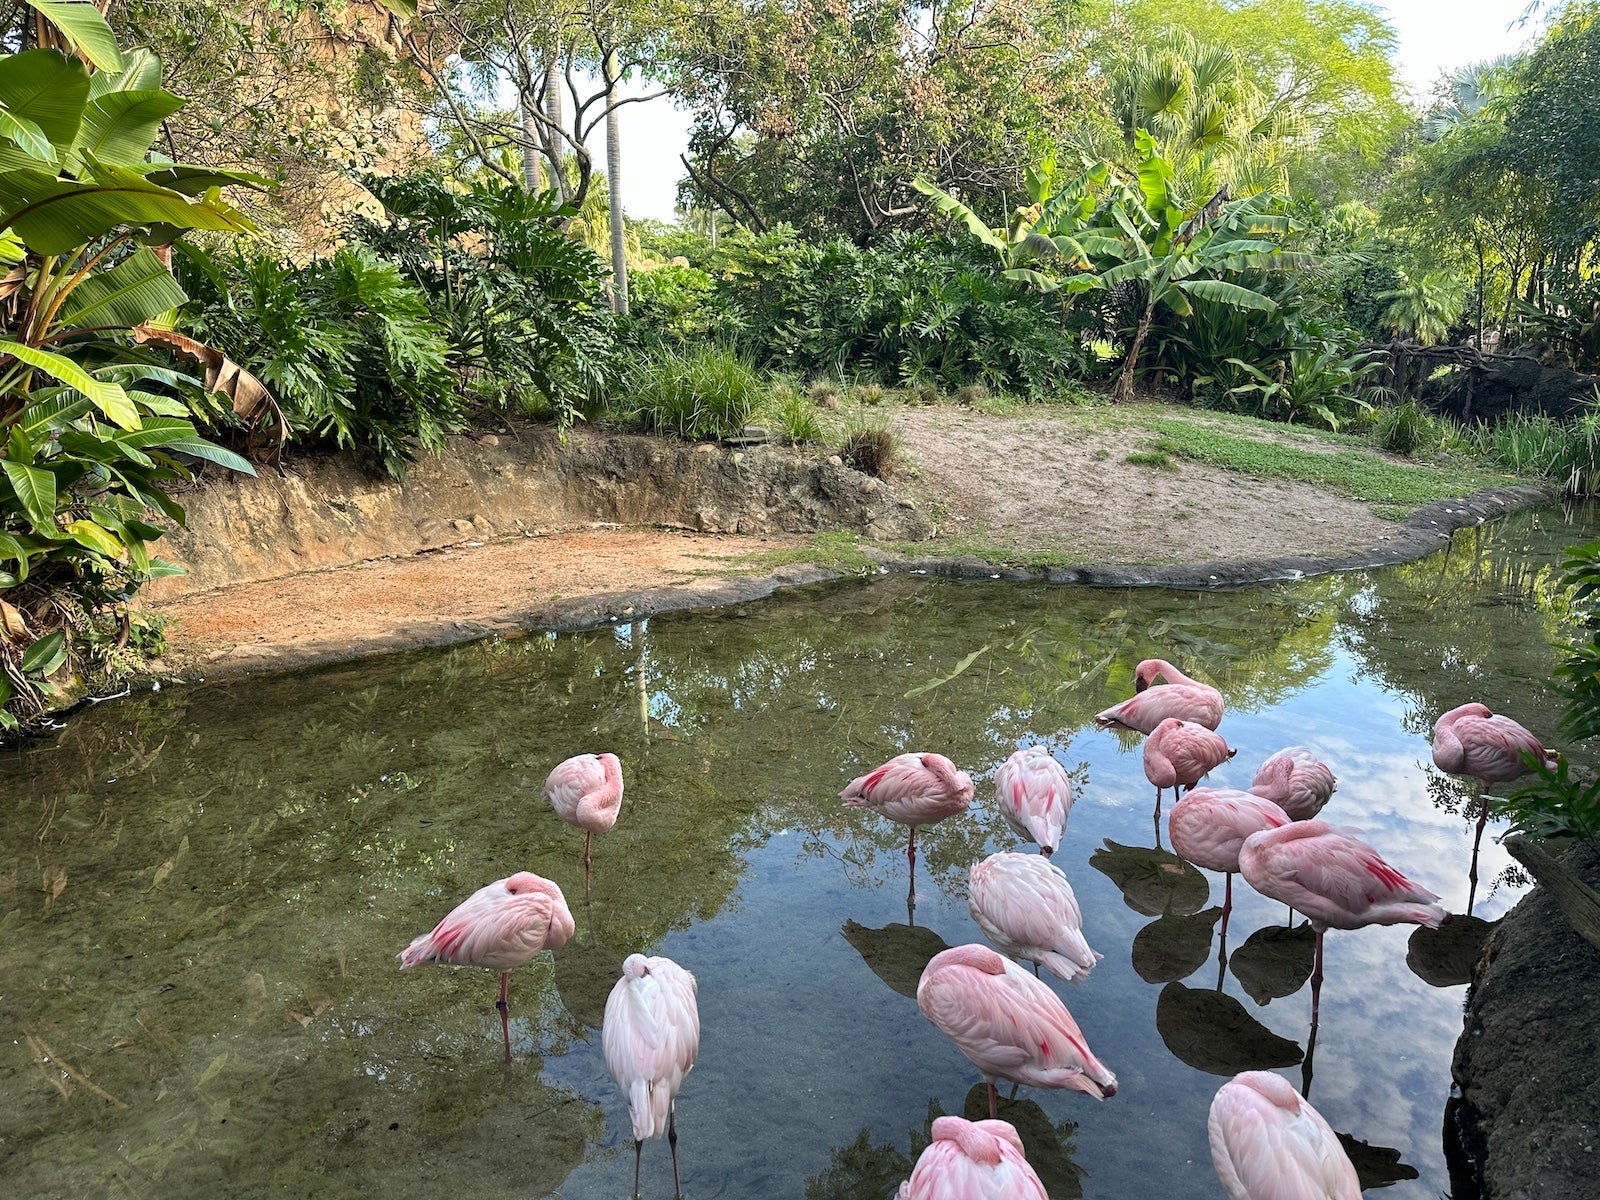 Flamingos at Disney's Animal Kingdom